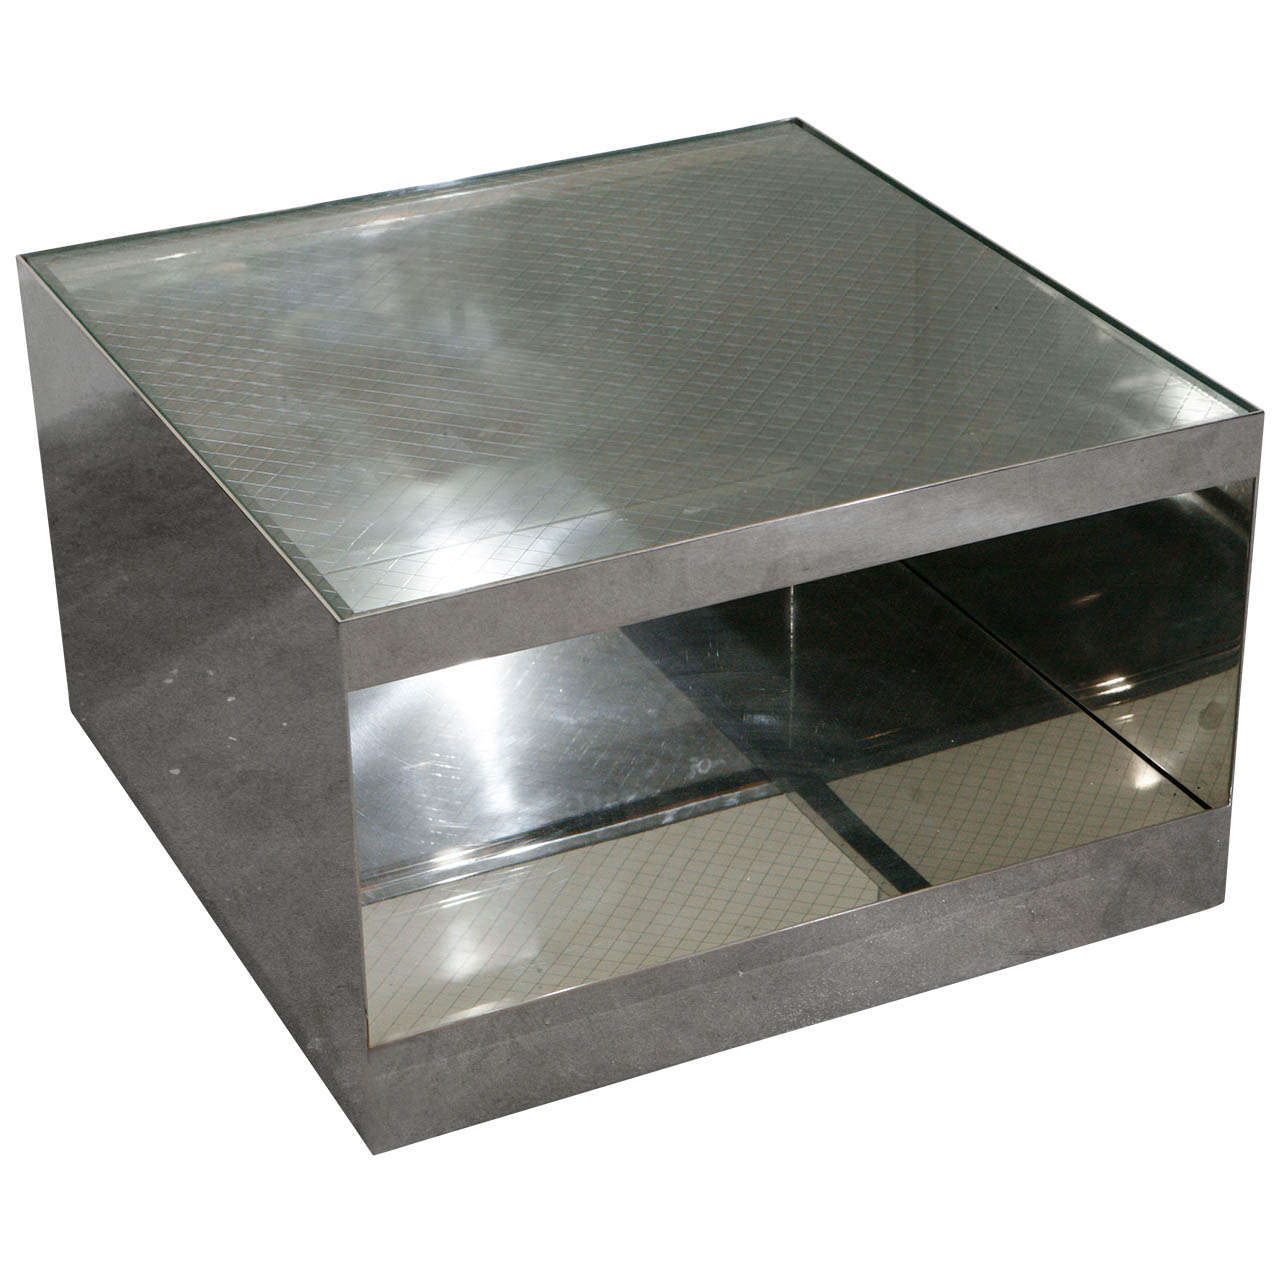 Joe D'urso Stainless Steel Table